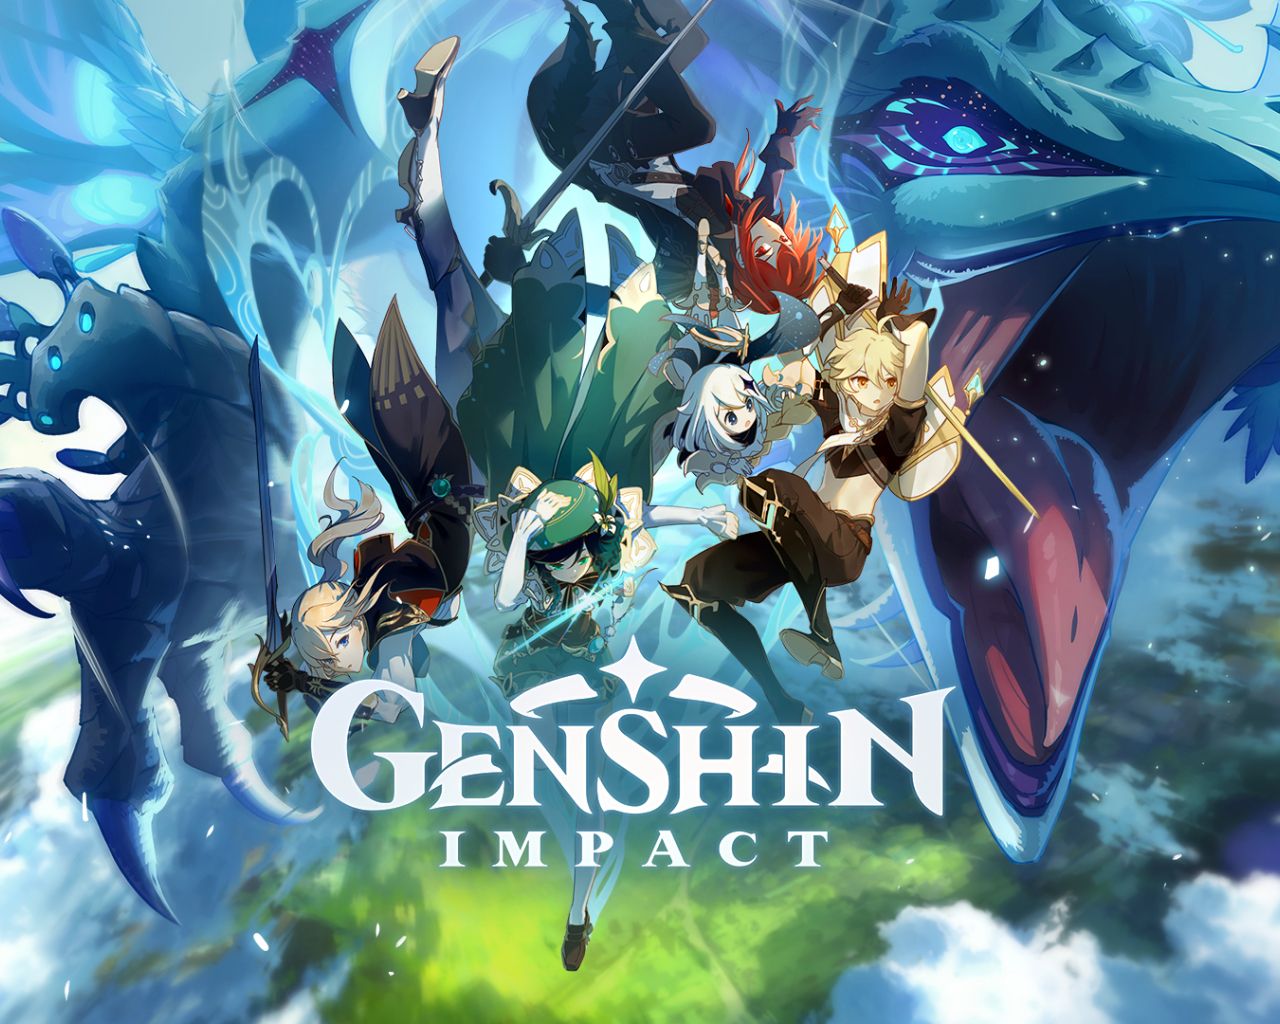 Genshin Impact 2020 1280x1024 Resolution Wallpaper, HD Games 4K Wallpaper, Image, Photo and Background